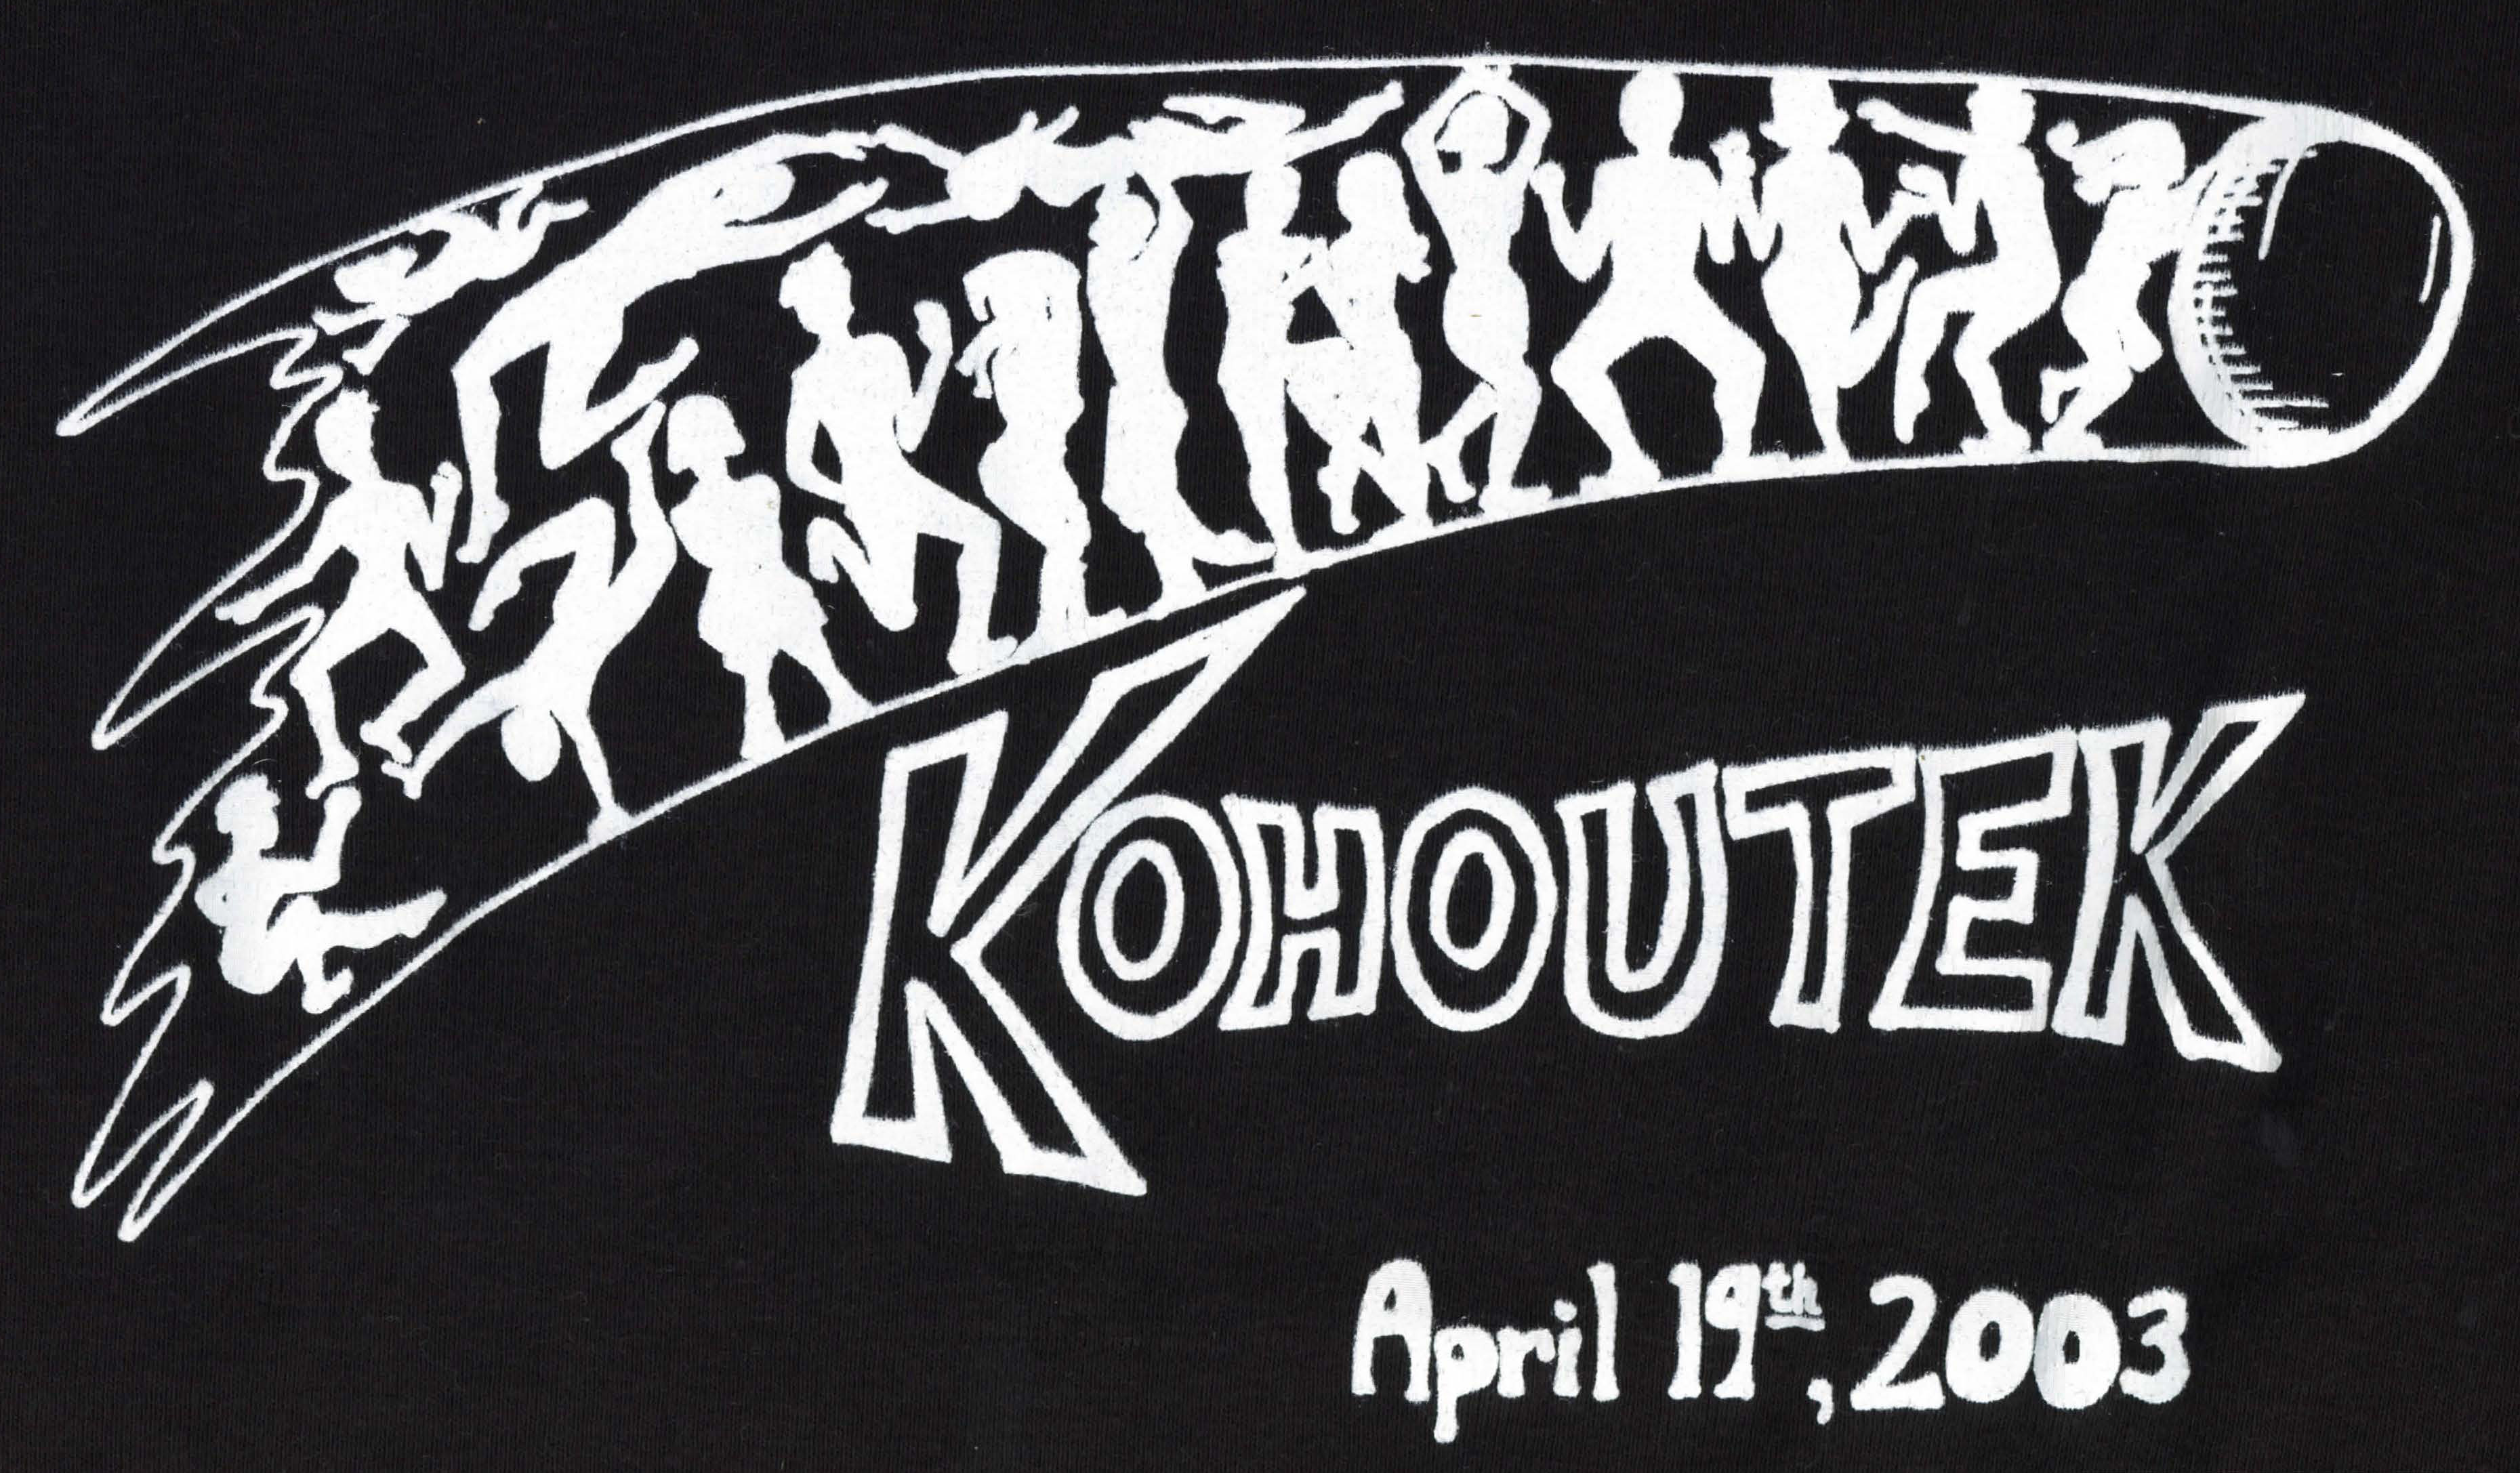 Kohoutek 2003 tshirt